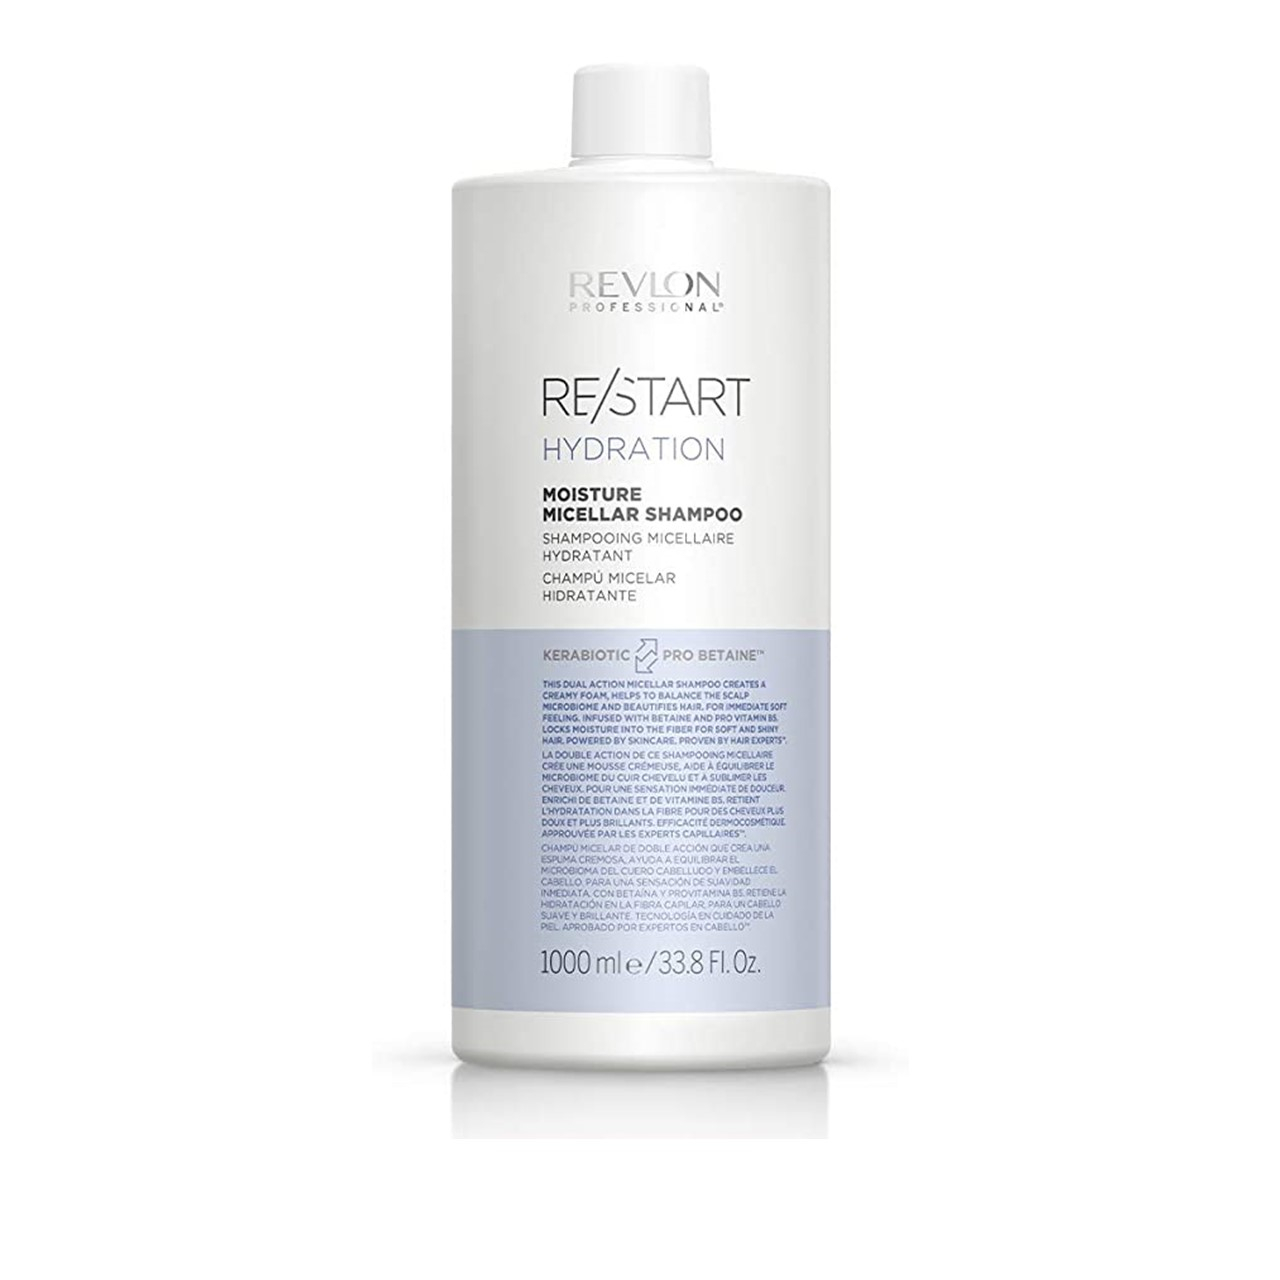 Revlon Professional Re/Start Hydration Moisture Micellar Shampoo 1L